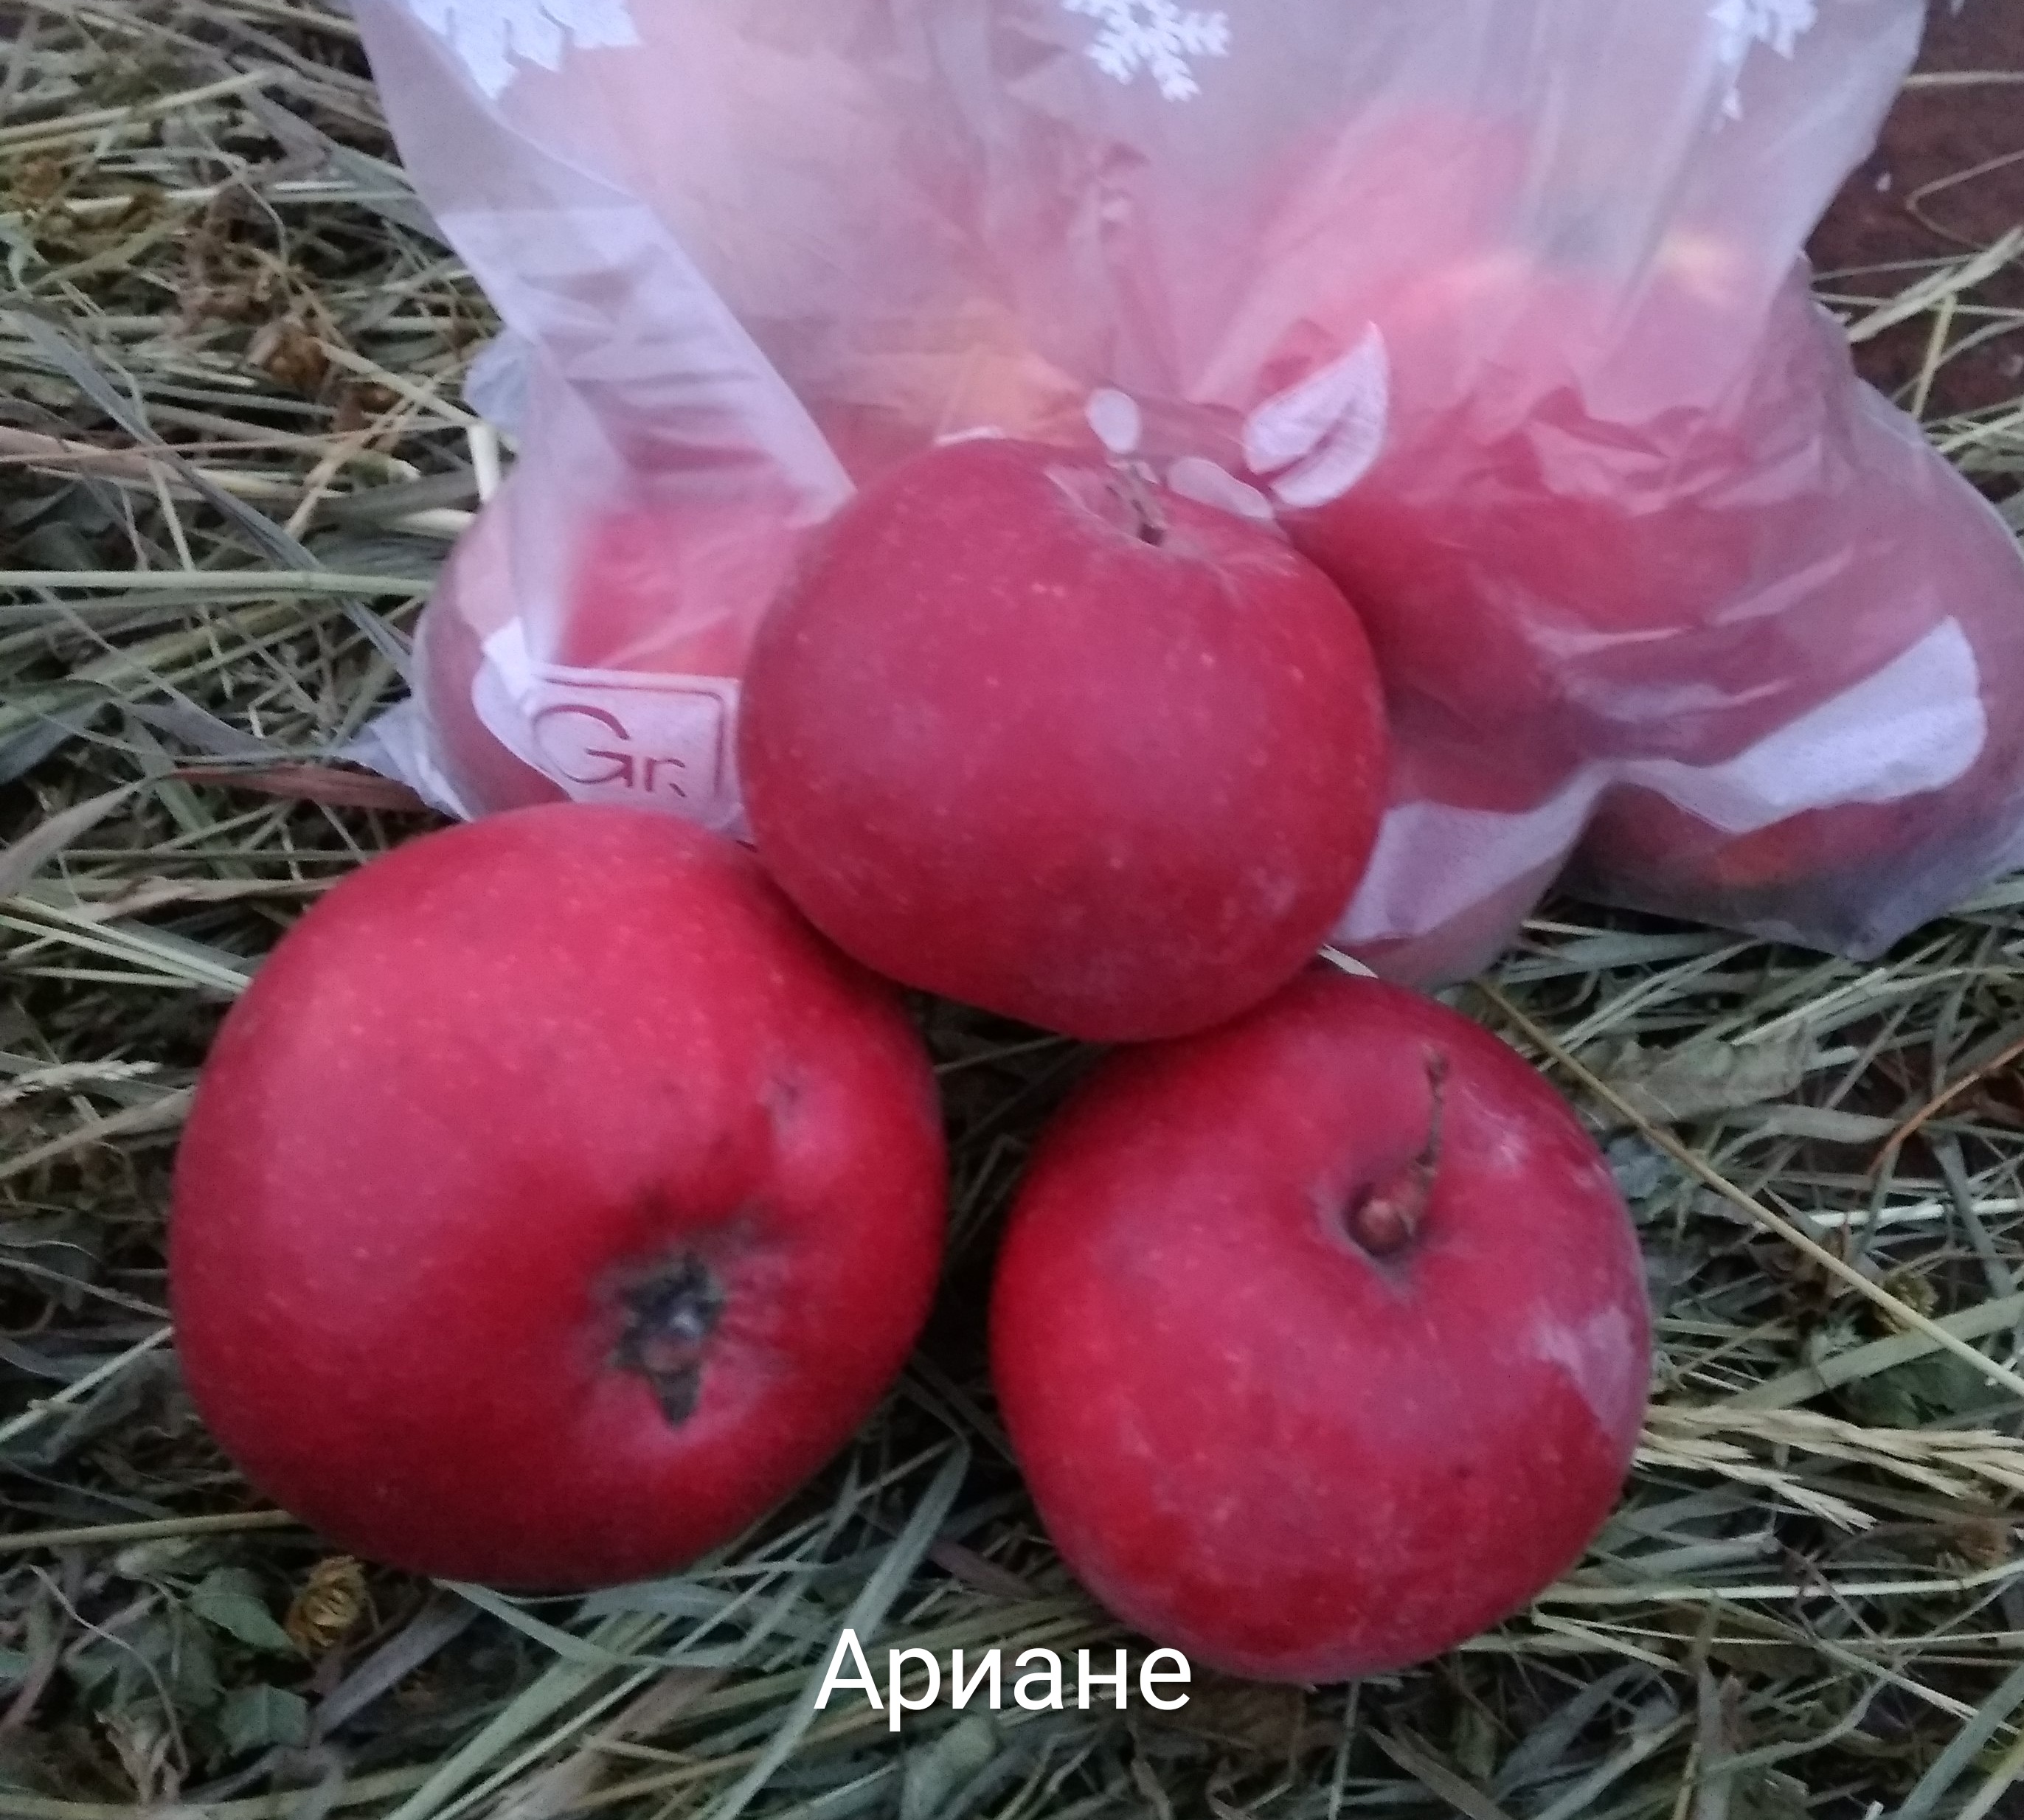 Академик Казакова сорт яблок